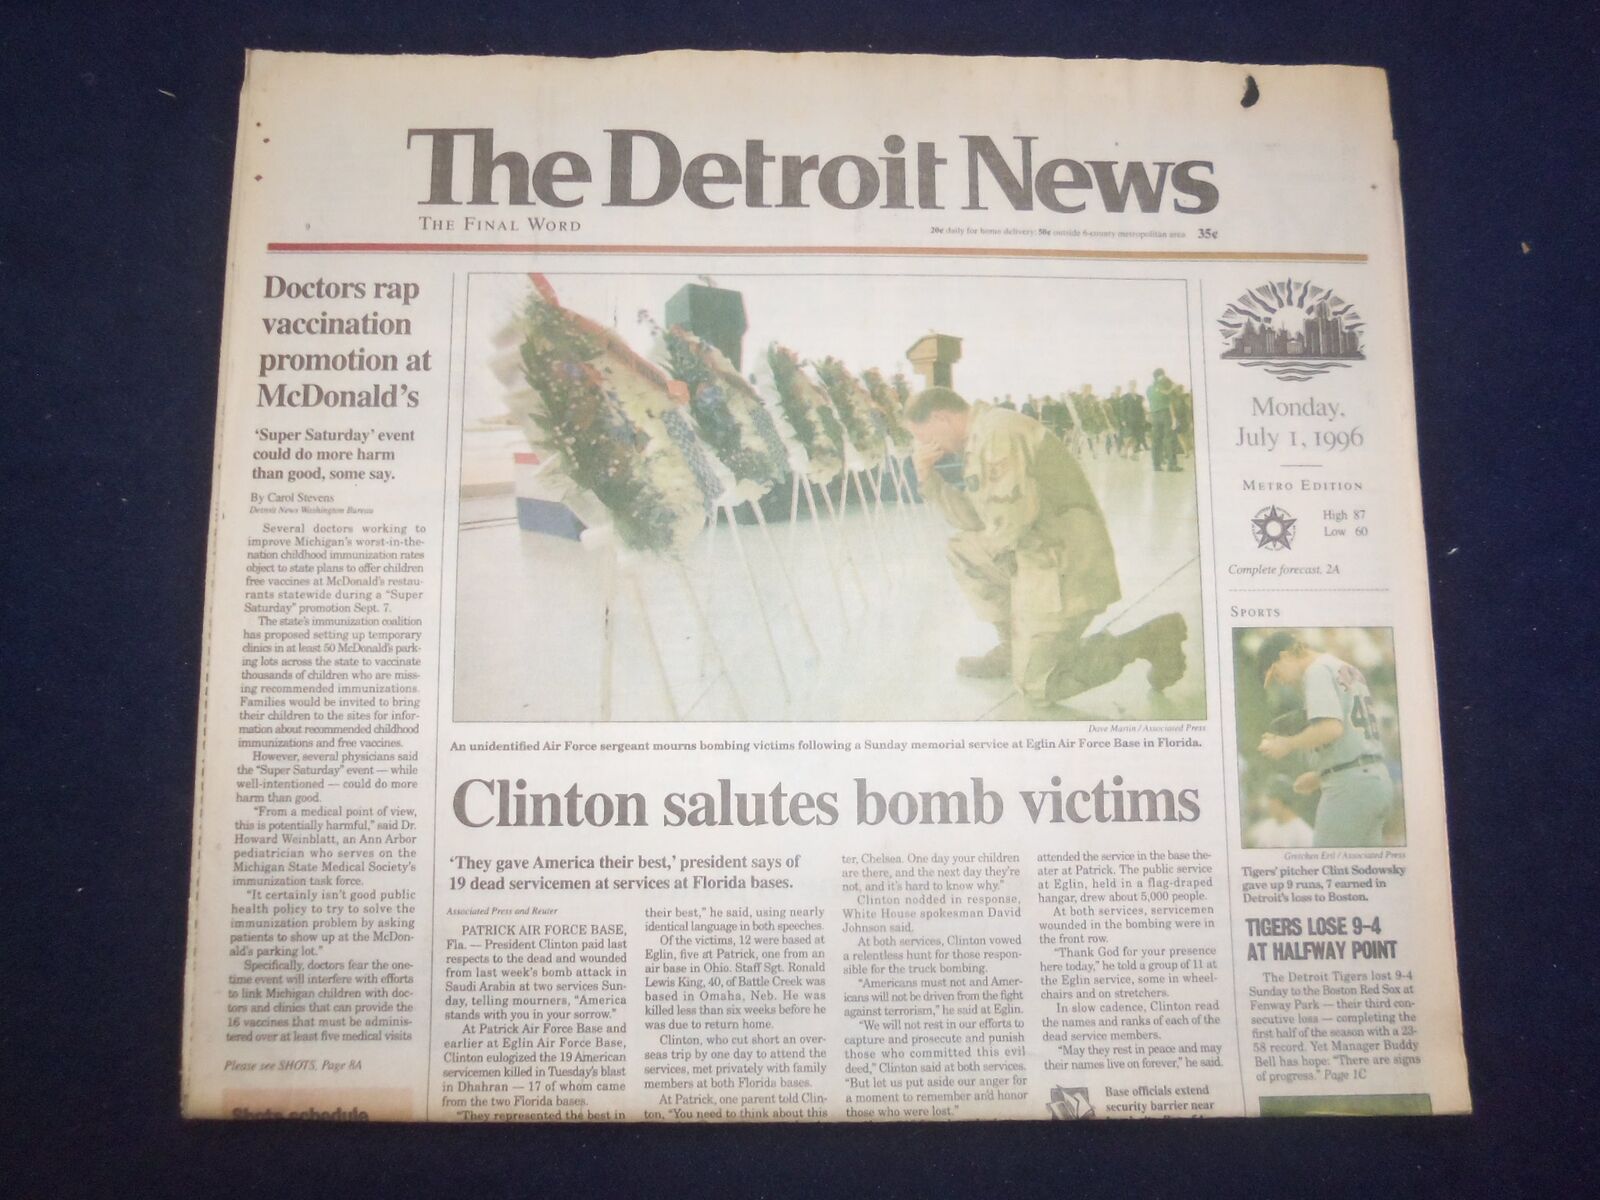 1996 JULY 1 THE DETROIT NEWS NEWSPAPER - CLINTON SALUTES BOMB VICTIMS - NP 7194